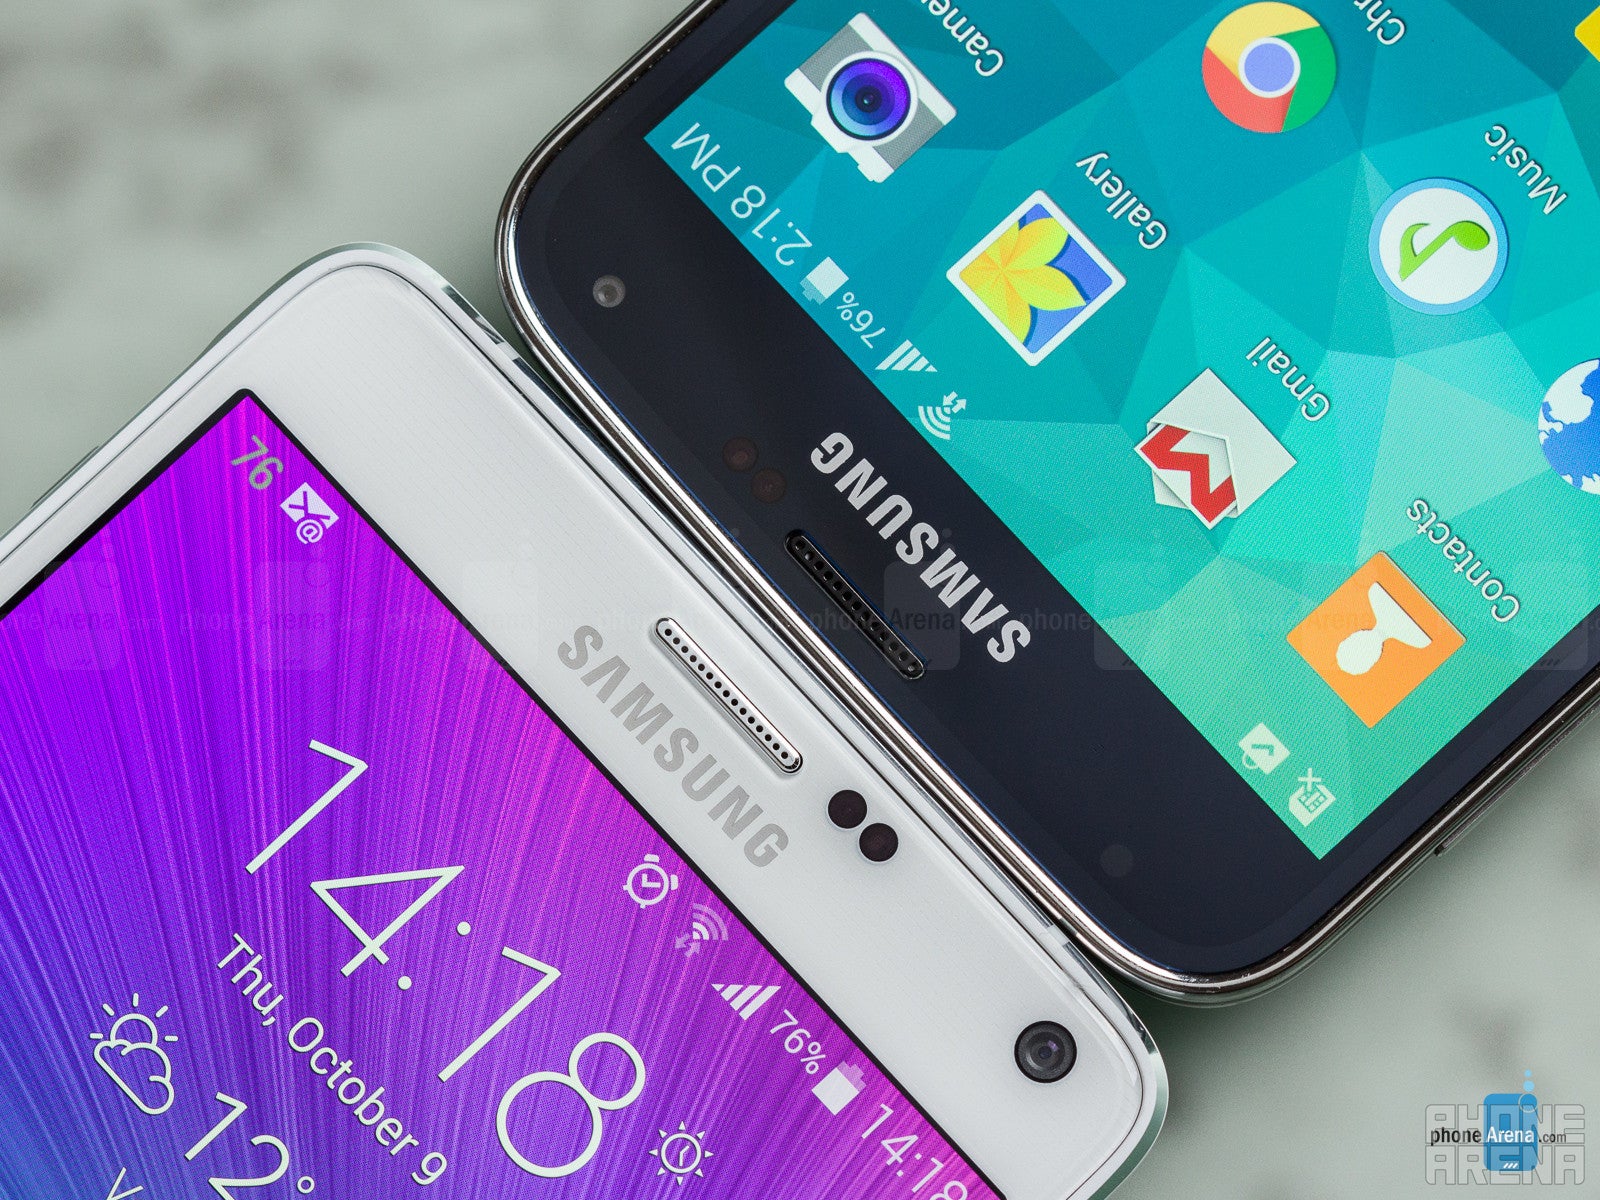 Samsung Galaxy Note 4 vs Samsung Galaxy S5